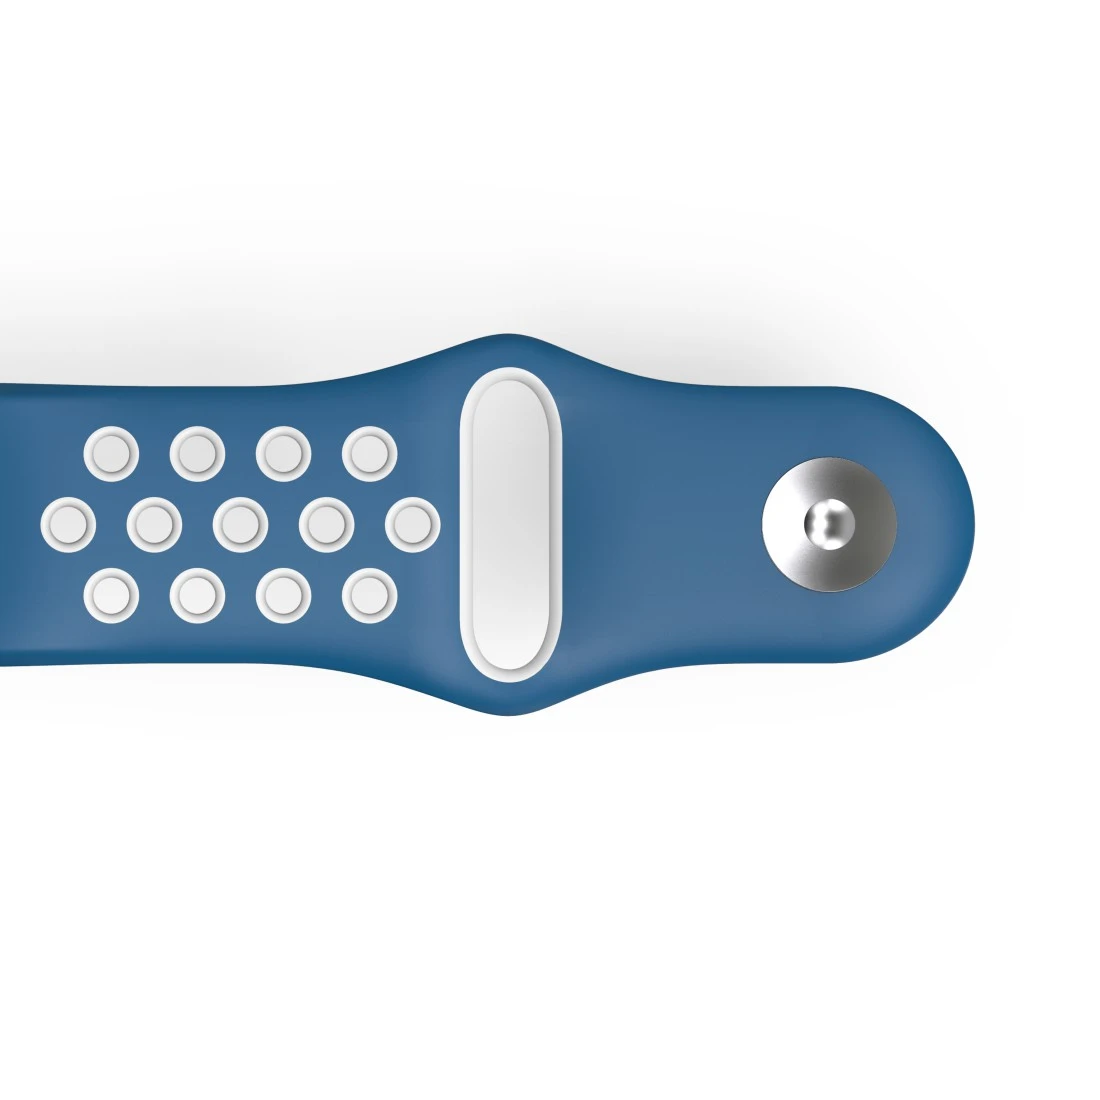 Sportarmband für Fitbit Charge 3/4, atmungsaktives Uhrenarmband, Blau/Grau  | Hama